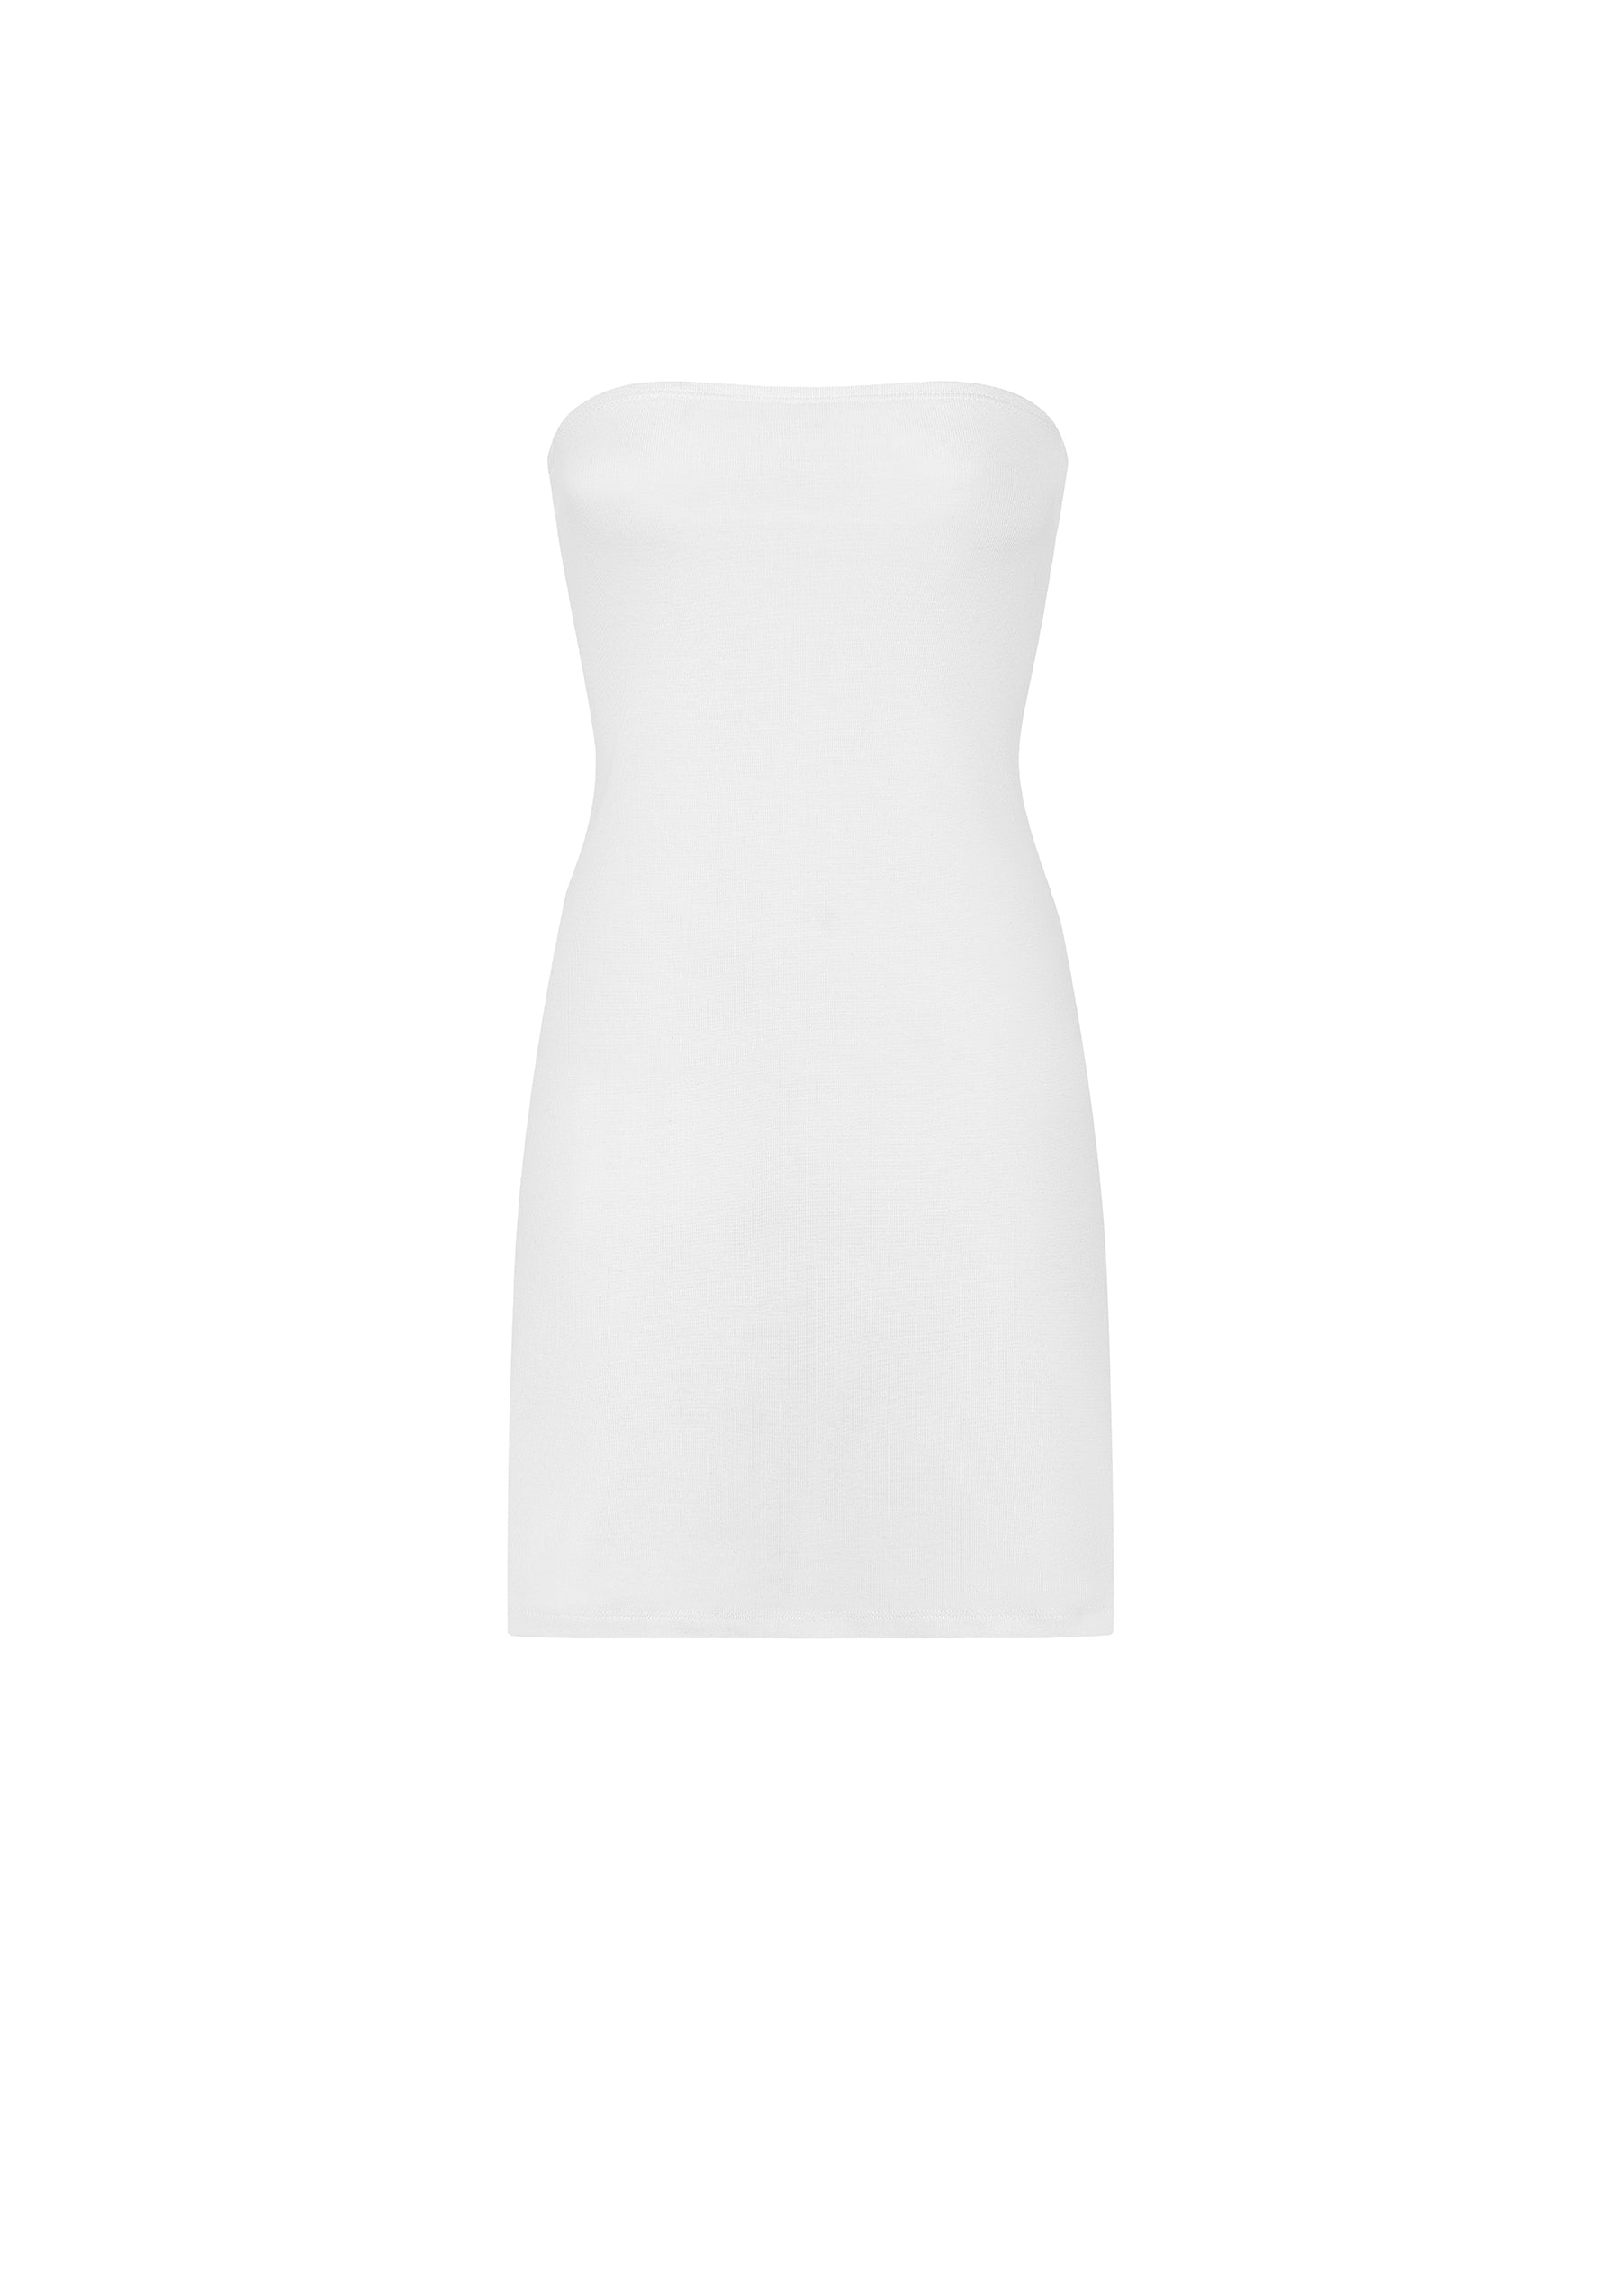 The Tube Dress: Cotton Jersey White